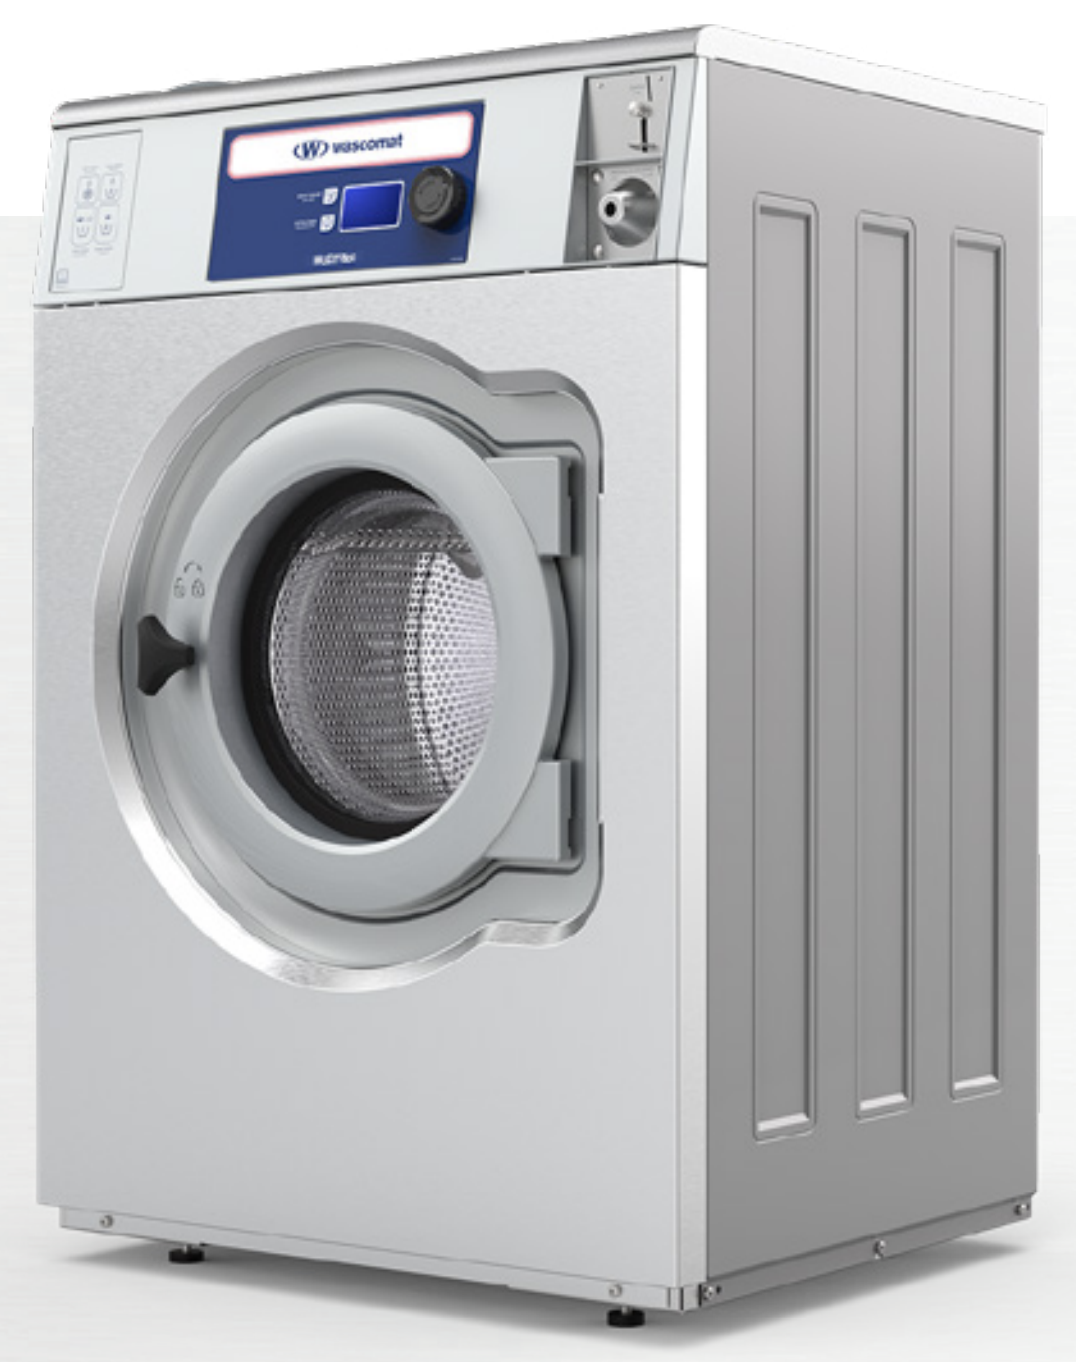 New 2022 Wascomat Wud760 - Cardinal Laundry Equipment Co